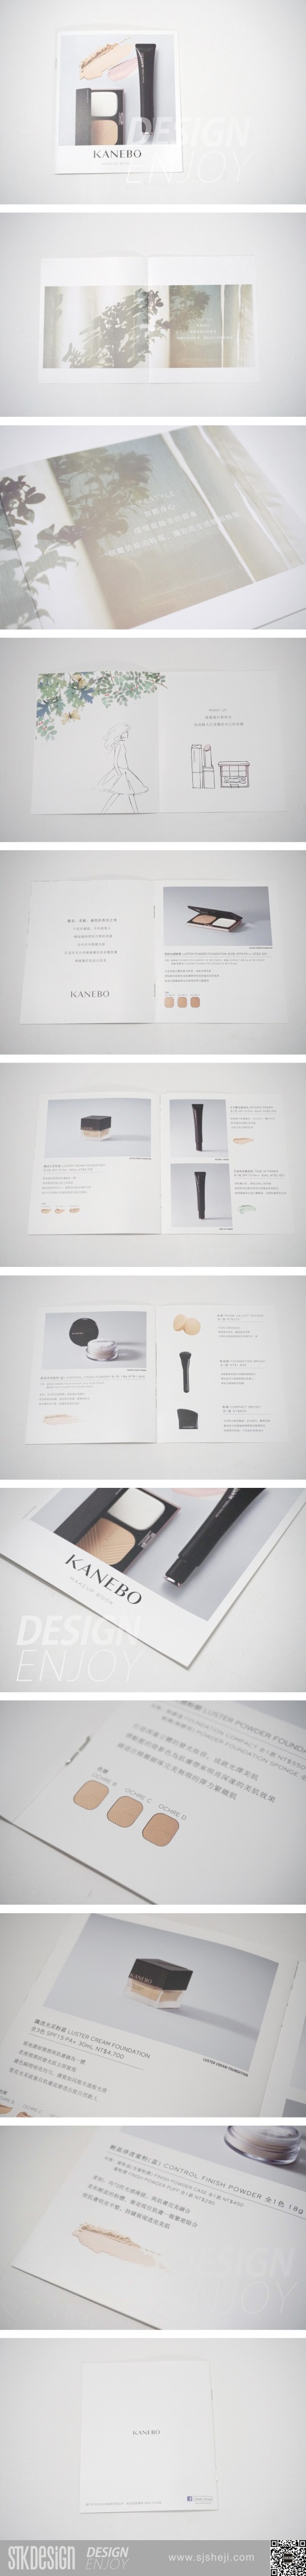 kanebo彩妆画册设计